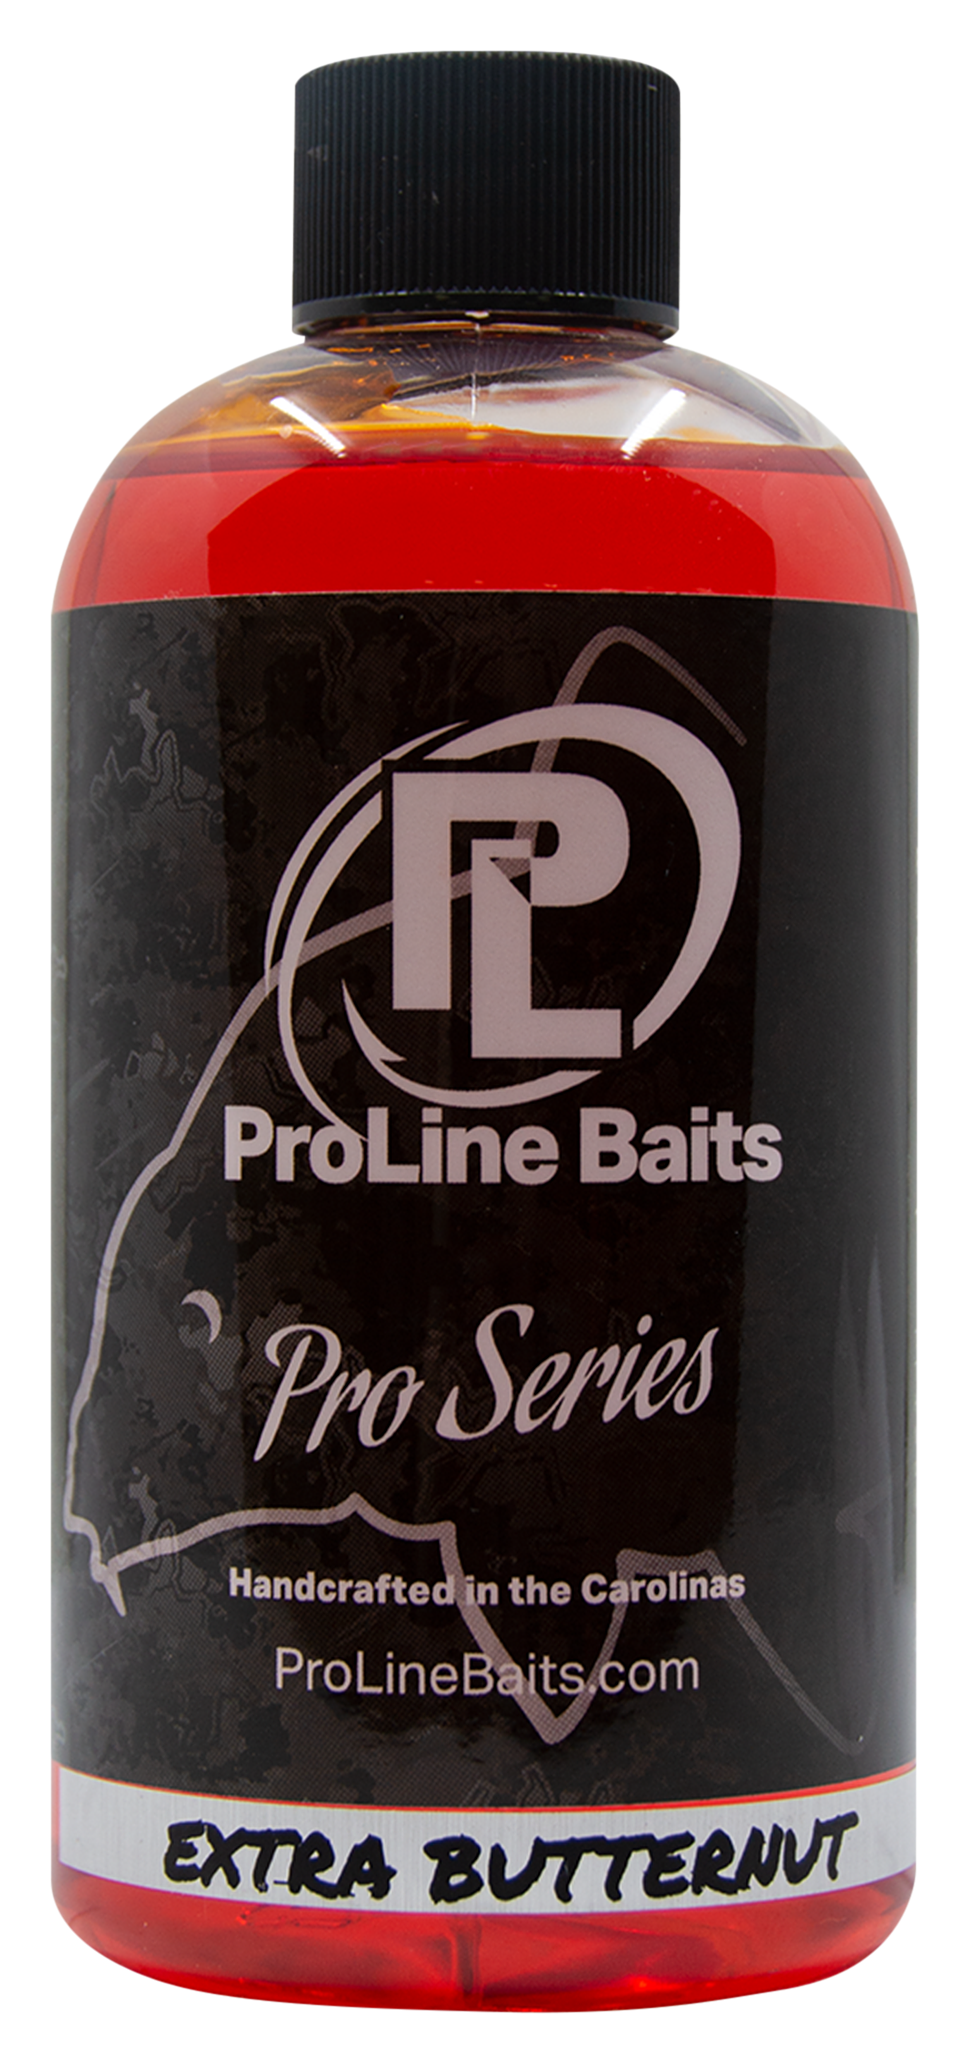 Proline Baits Pro Series Carp Fish Attractant - Extra Butternut